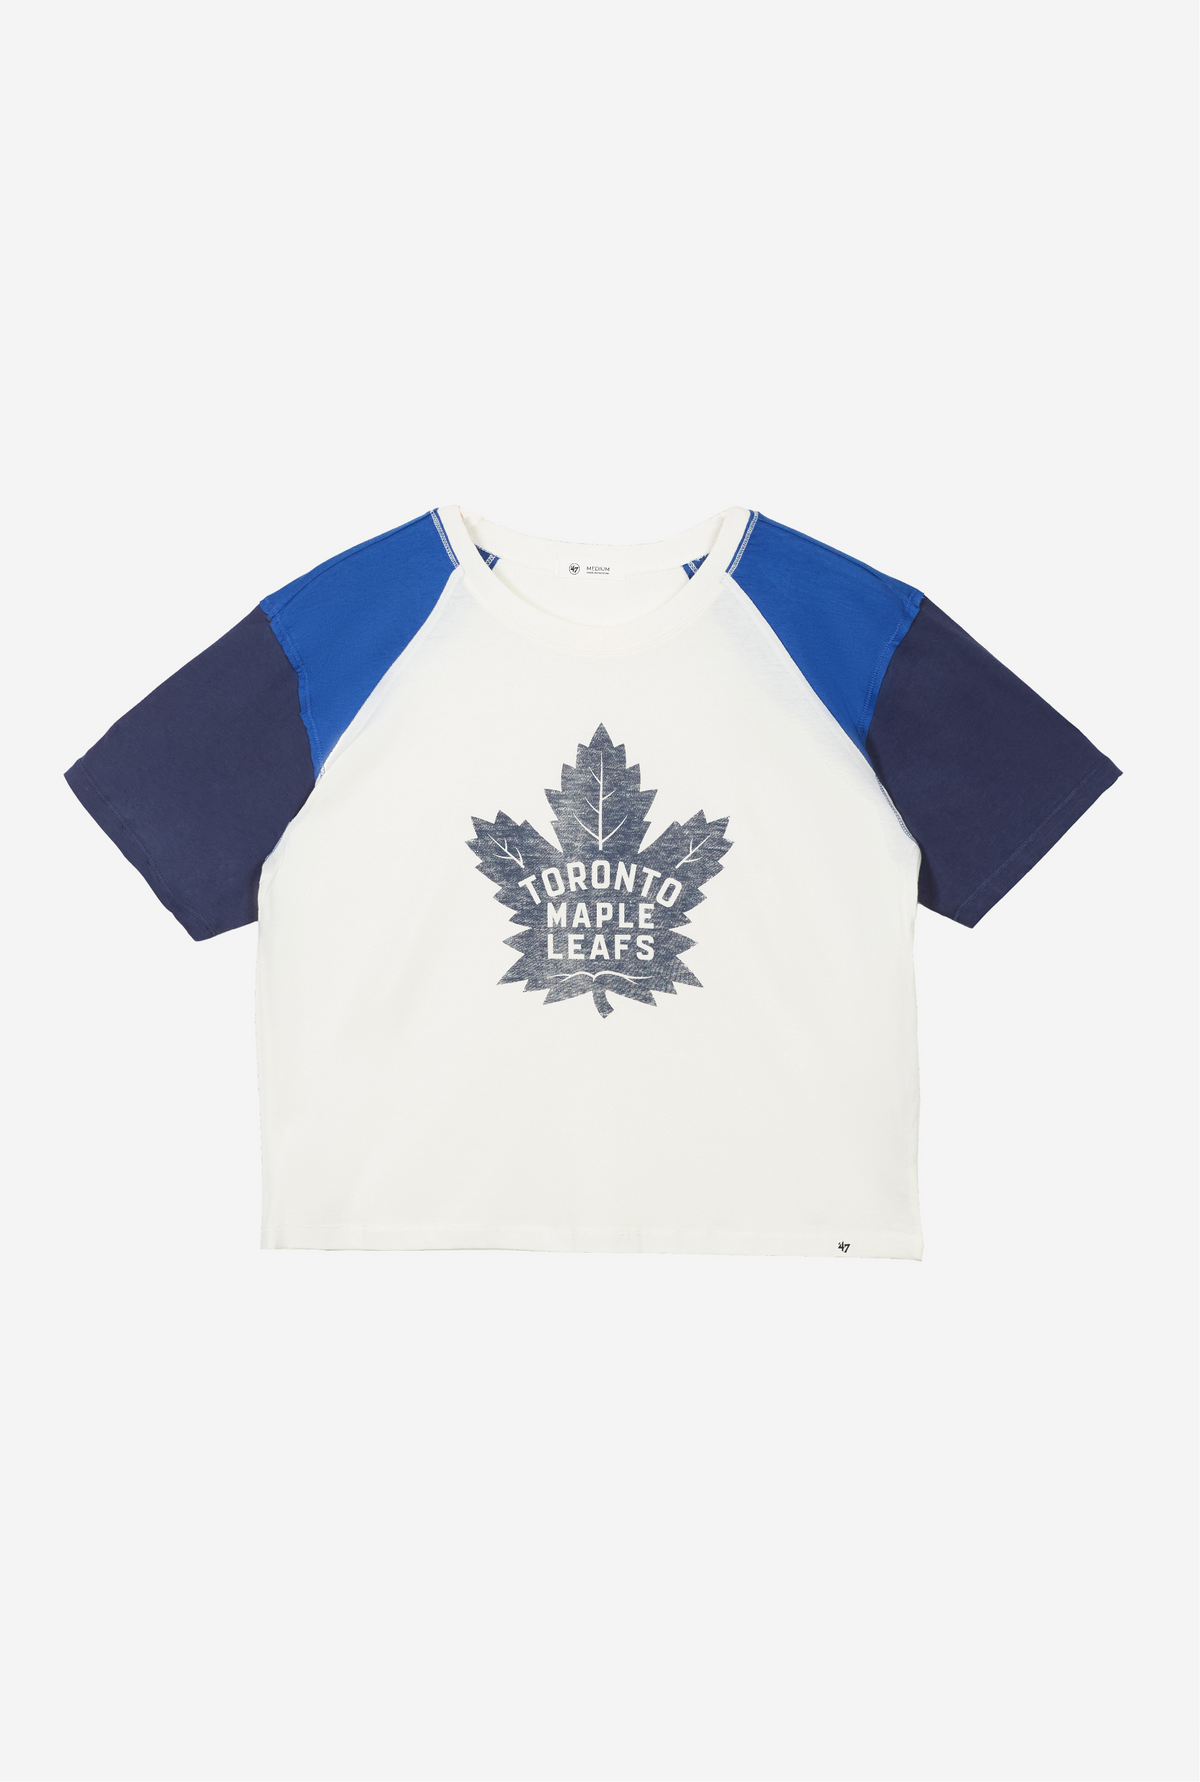 Toronto Maple Leafs Gia Cropped T-Shirt